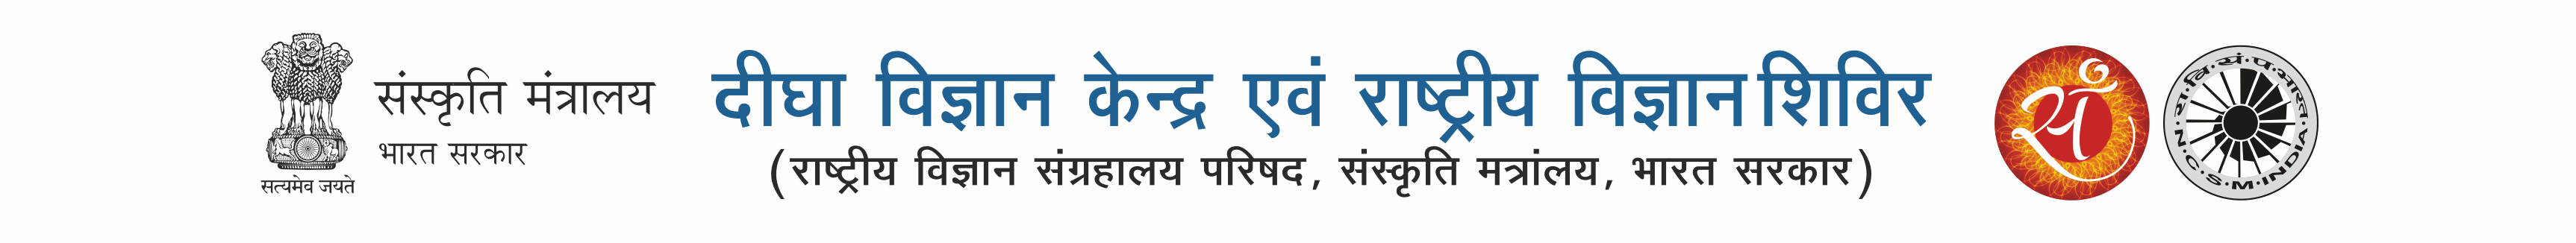 Digha hindi banner